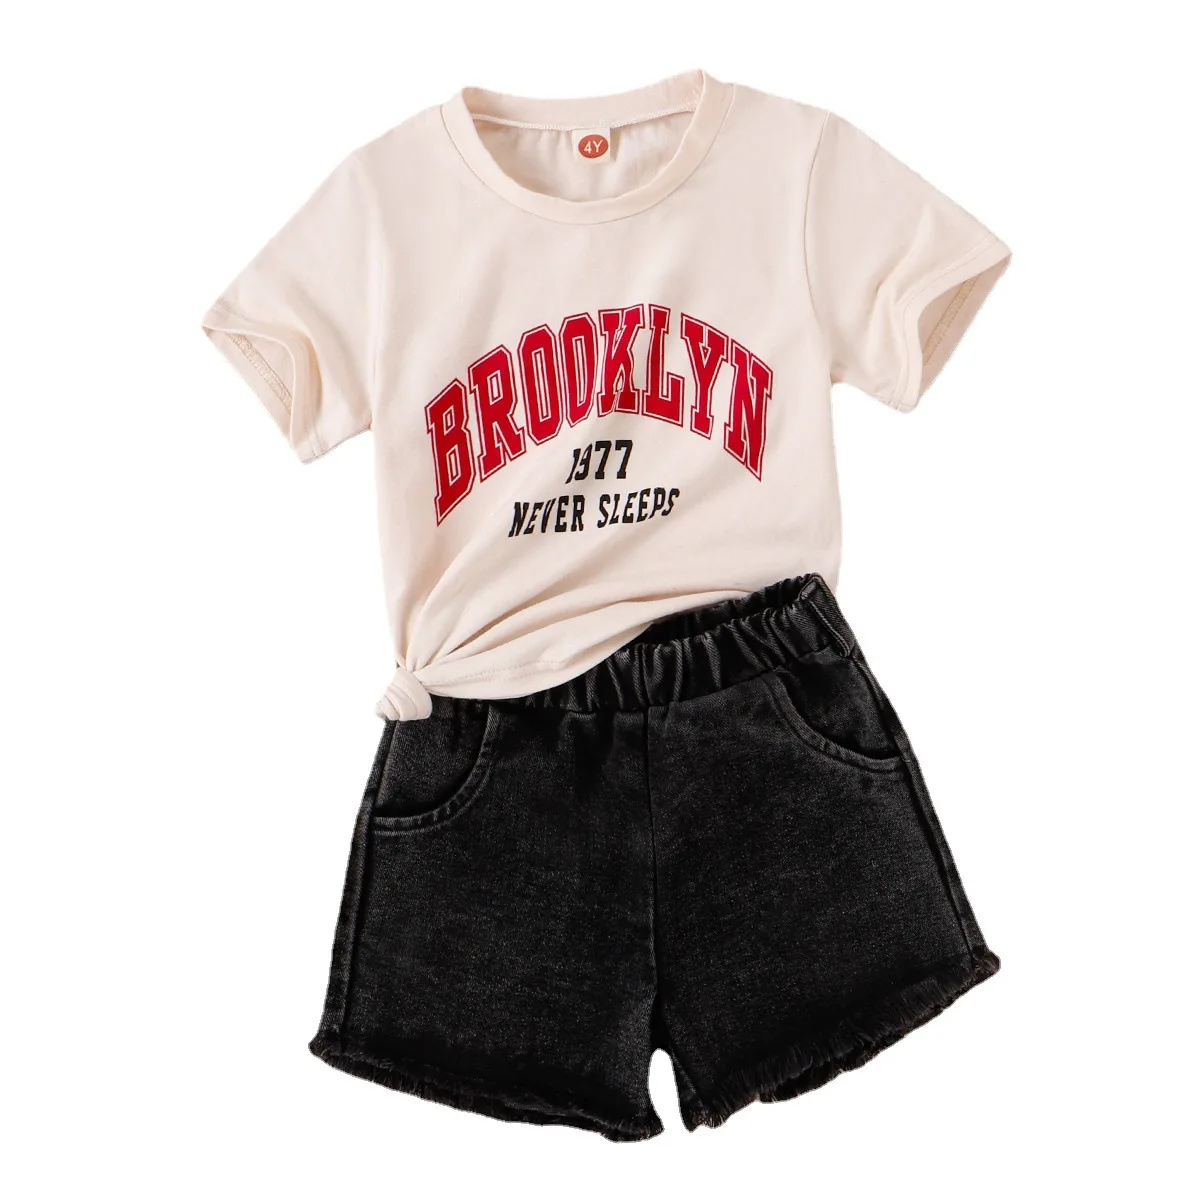 New summer fashion toddler girls clothing outfits short sleeve letter design shirts+shorts boutique kids children sets